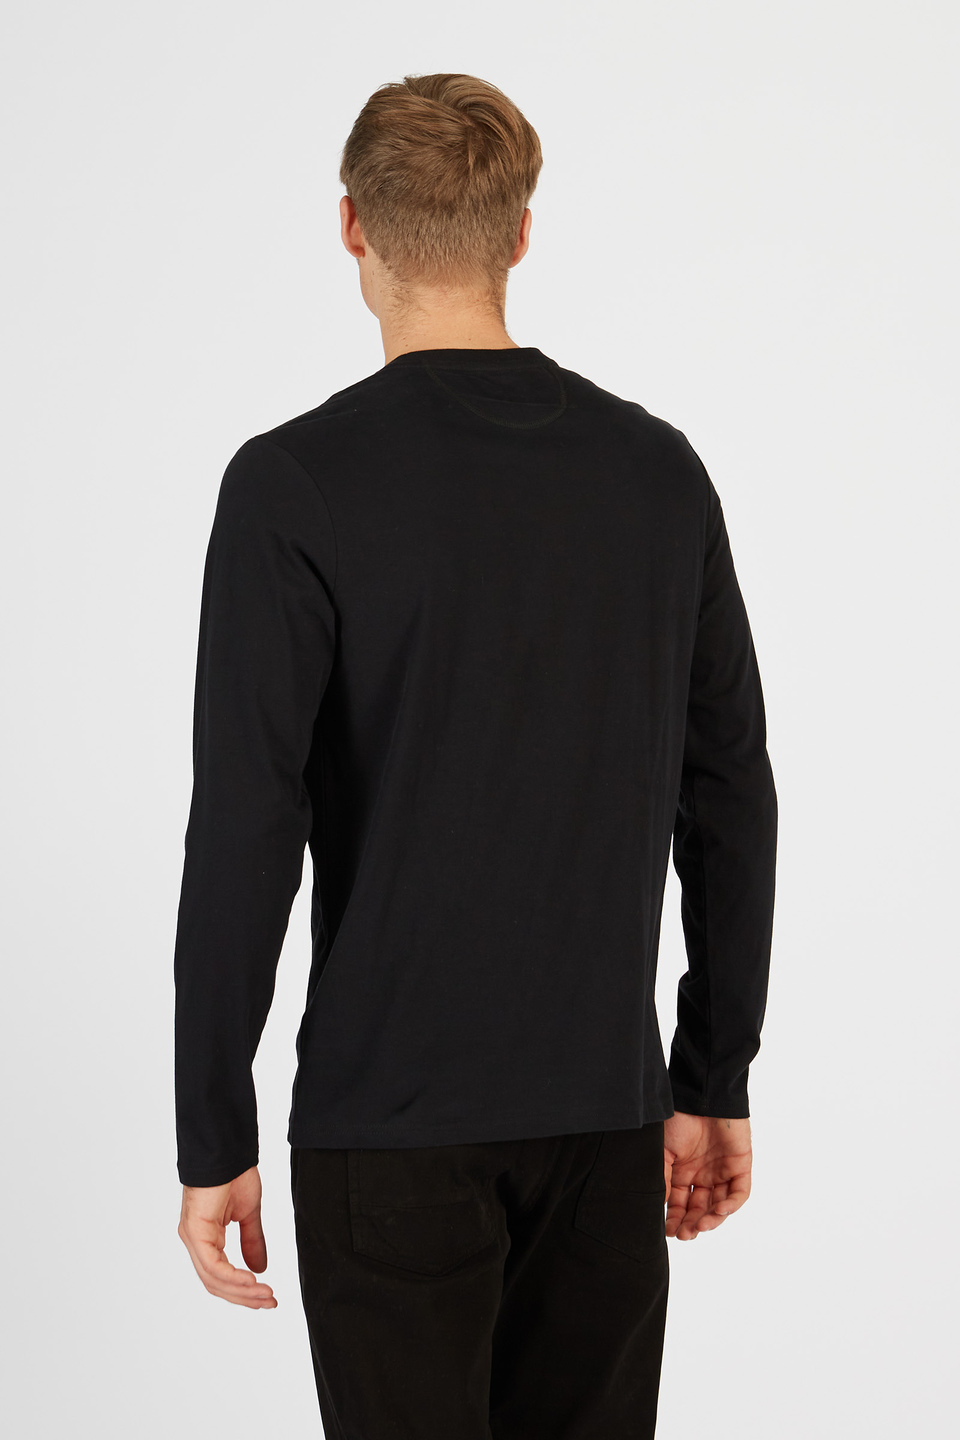 T-shirt da uomo a maniche lunghe in cotone 100% regular fit | La Martina - Official Online Shop